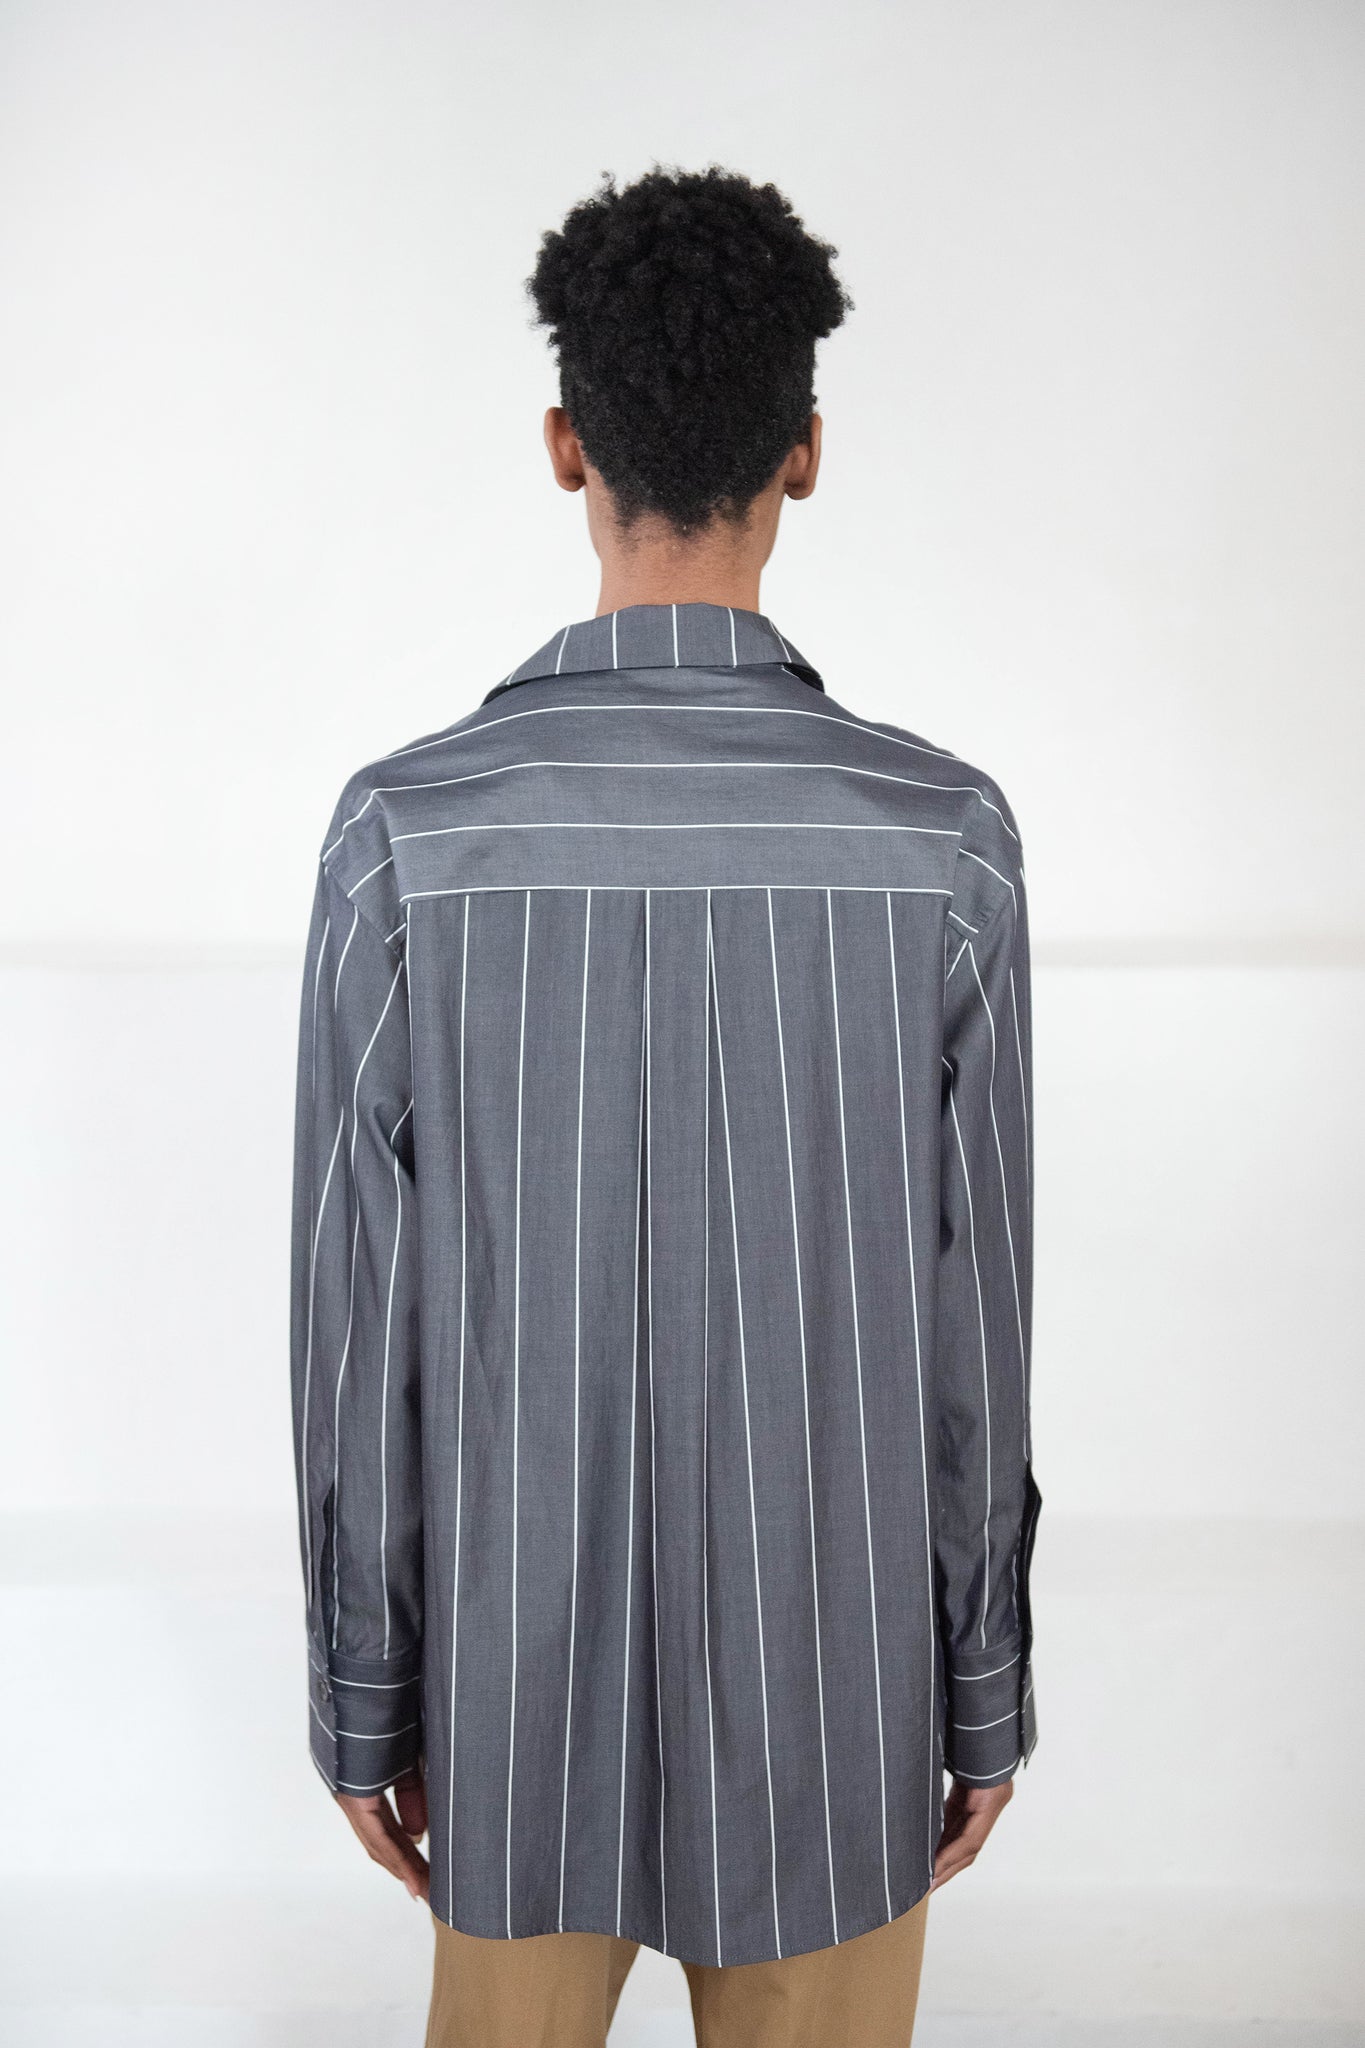 Christian Wijnants - Thinka Shirt, Charcoal Stripe